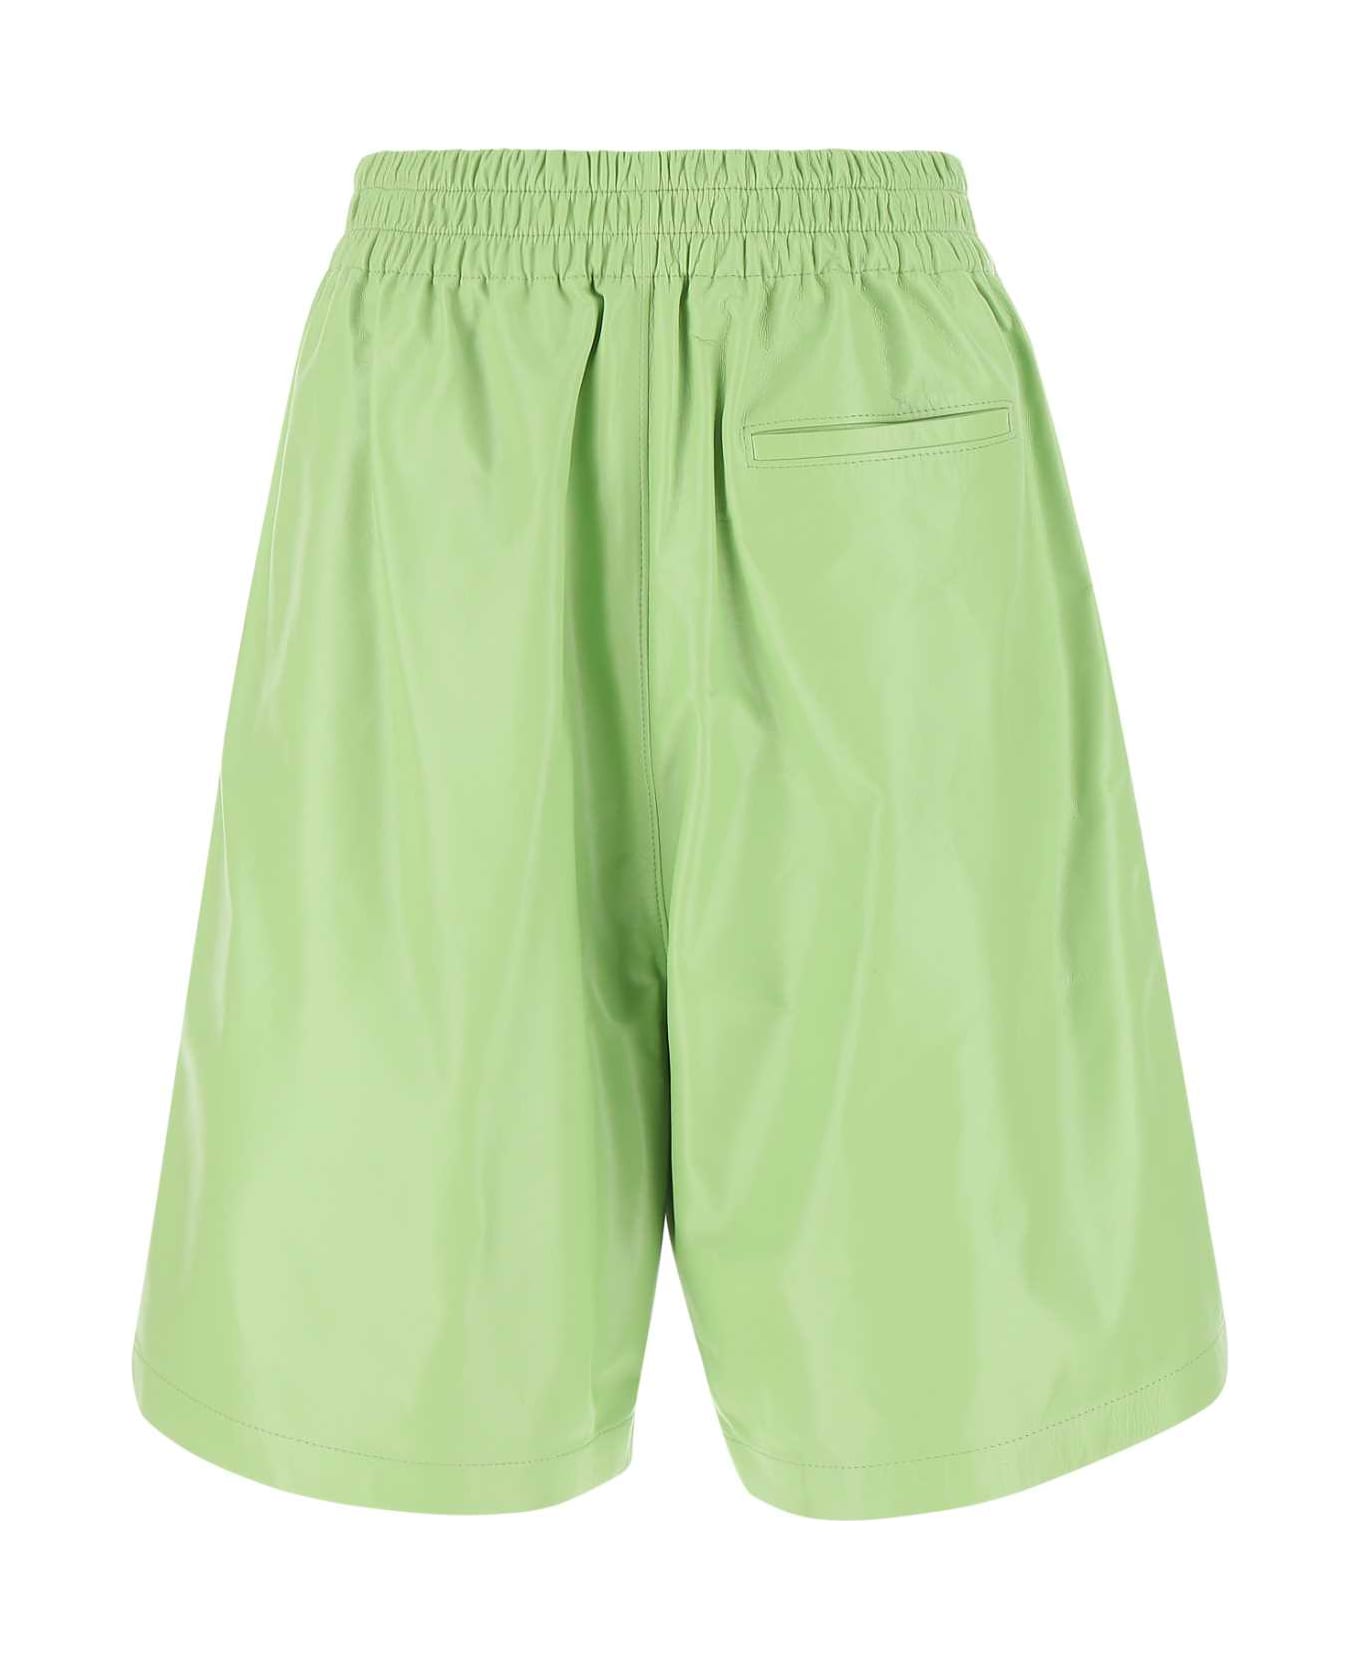 Bottega Veneta Pastel Green Leather Shorts - 3516 ショートパンツ